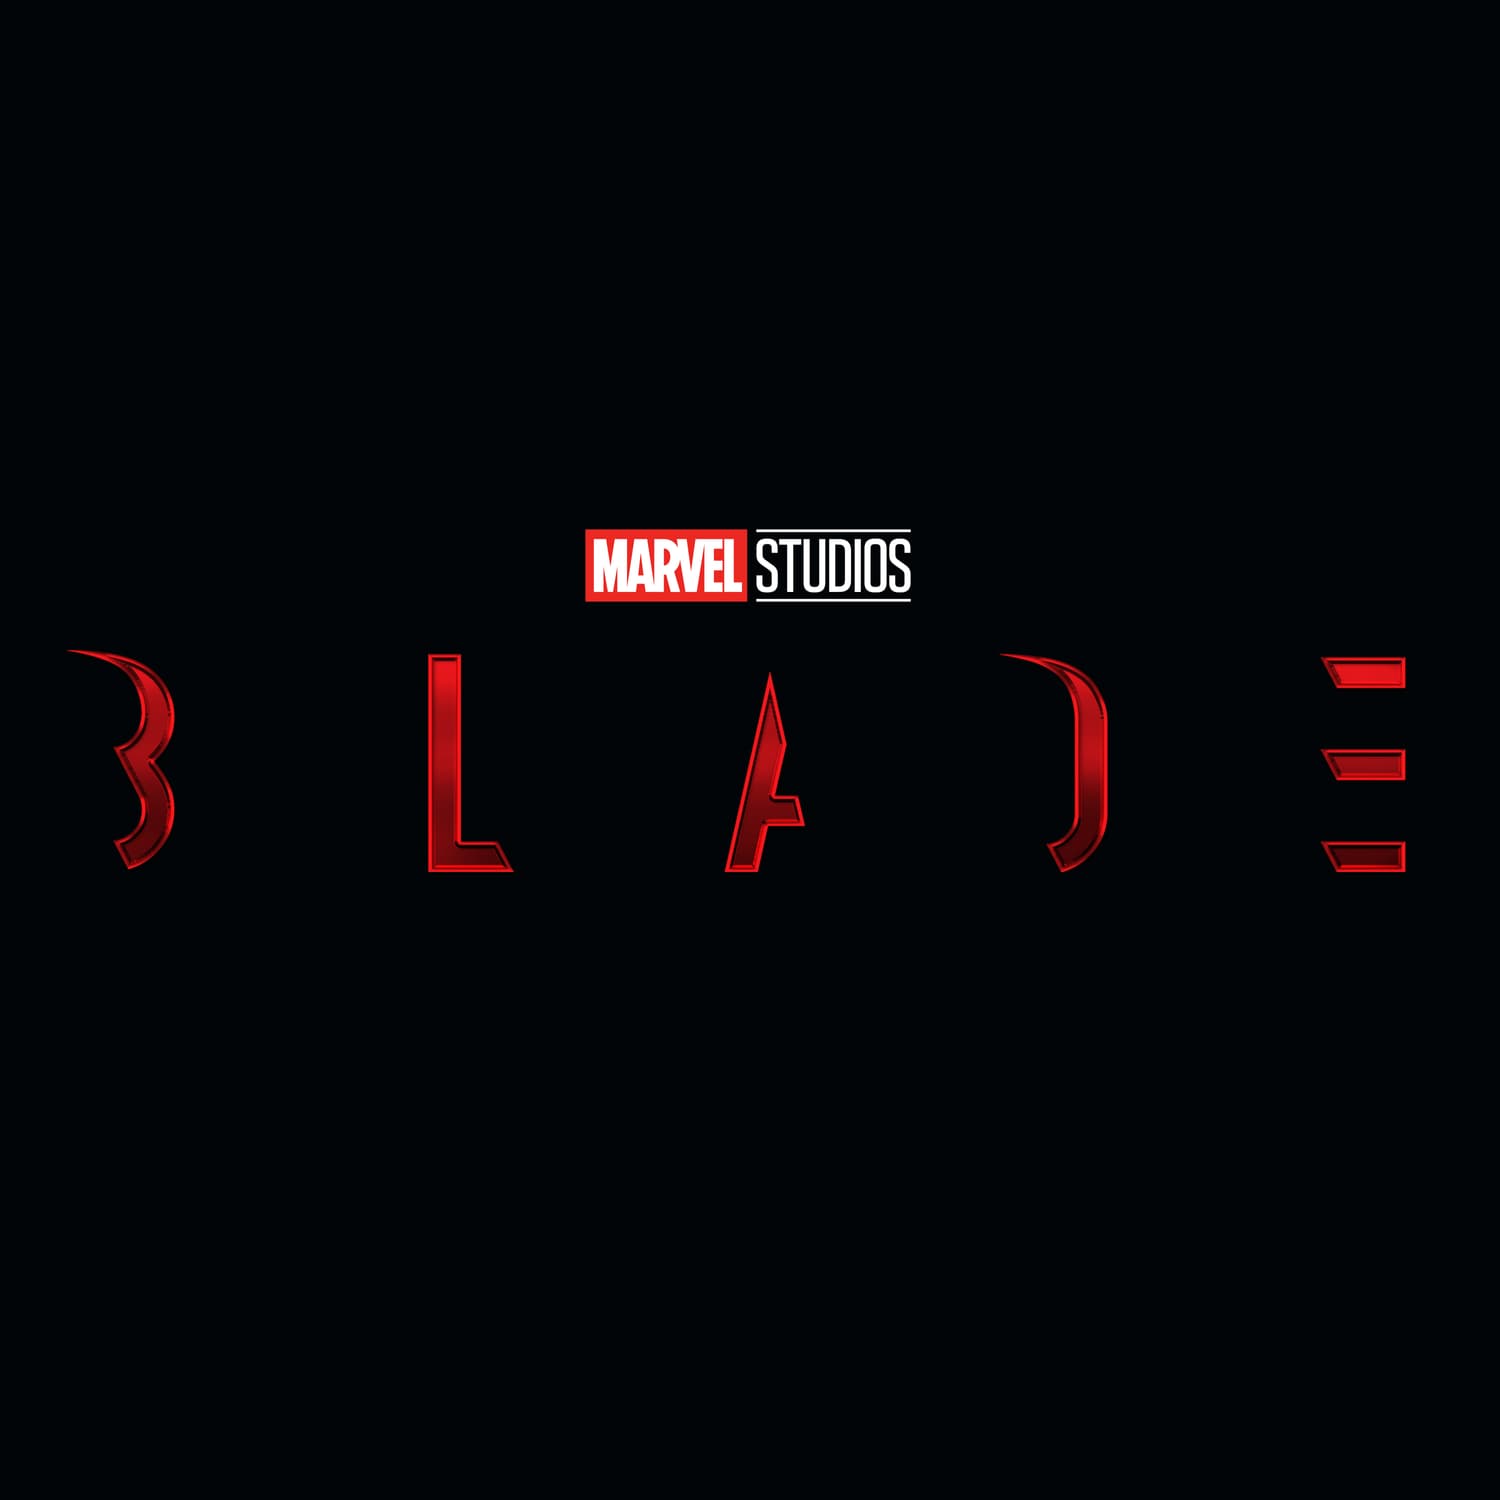 Marvel Studios' Blade